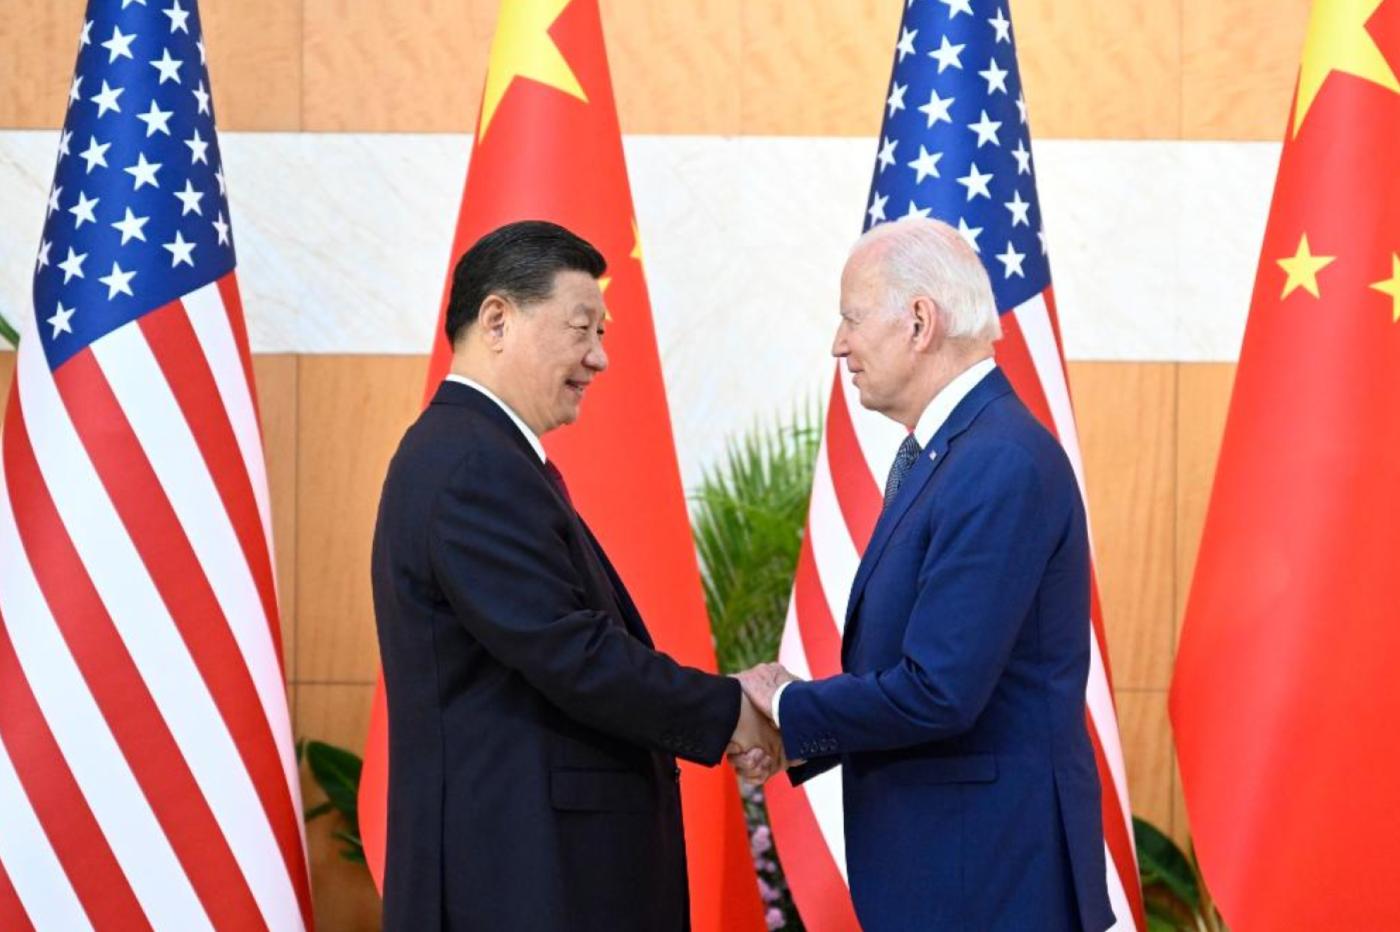 Meeting between Xi Jinping and Joe Biden 